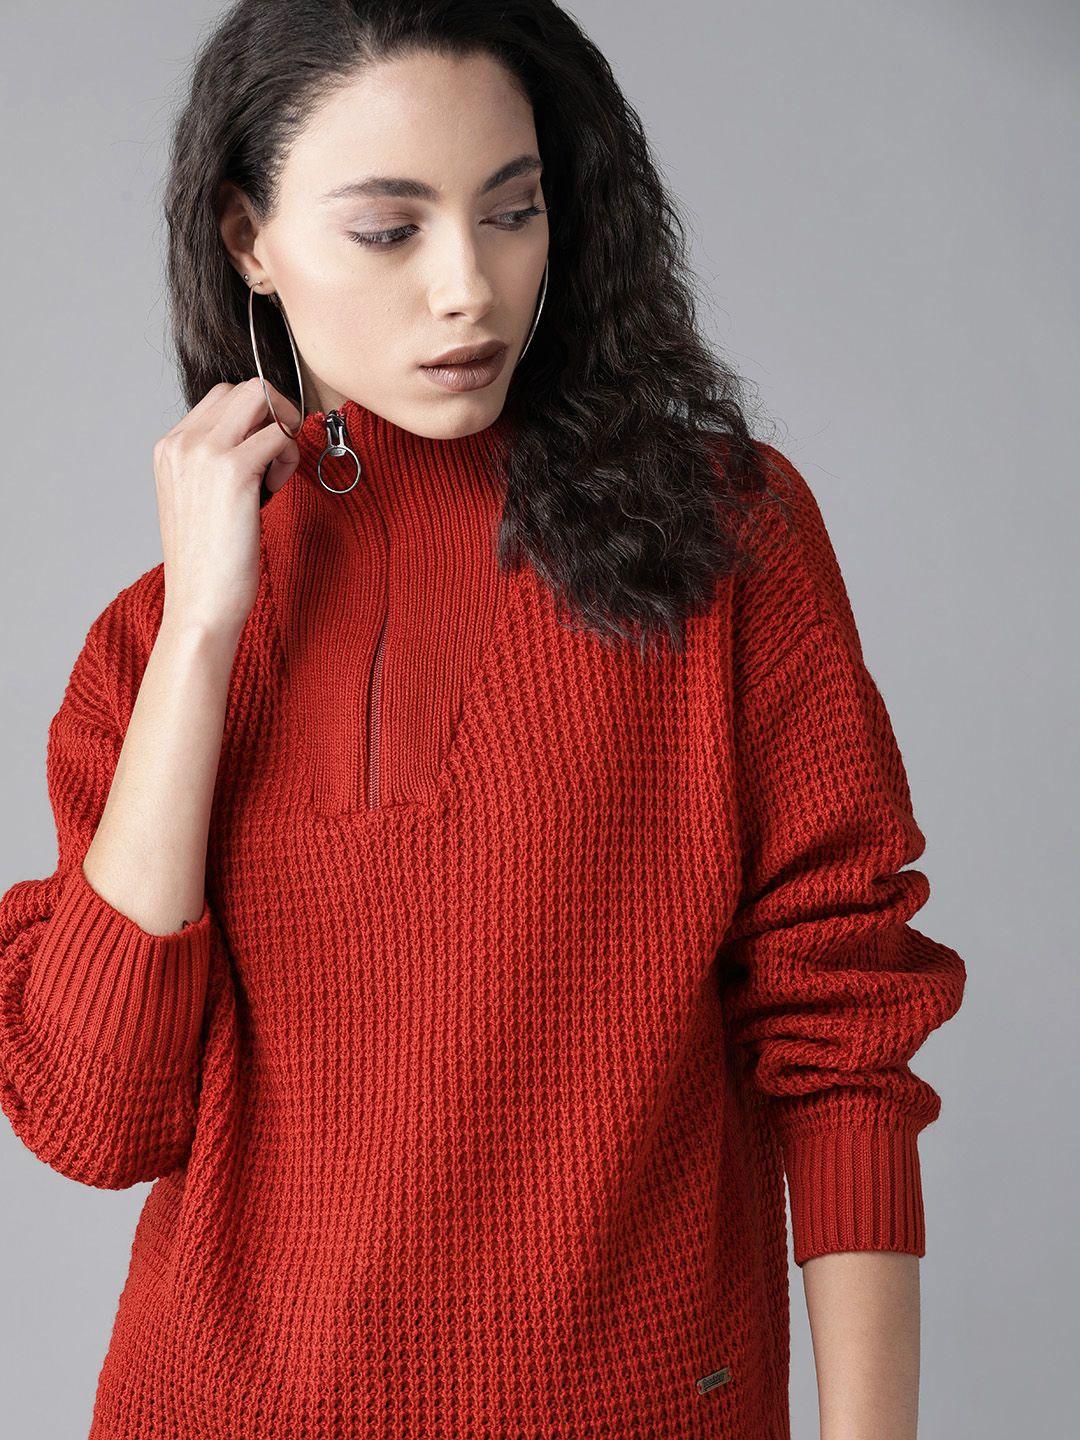 roadster-women-rust-red-open-knit-pullover-sweater